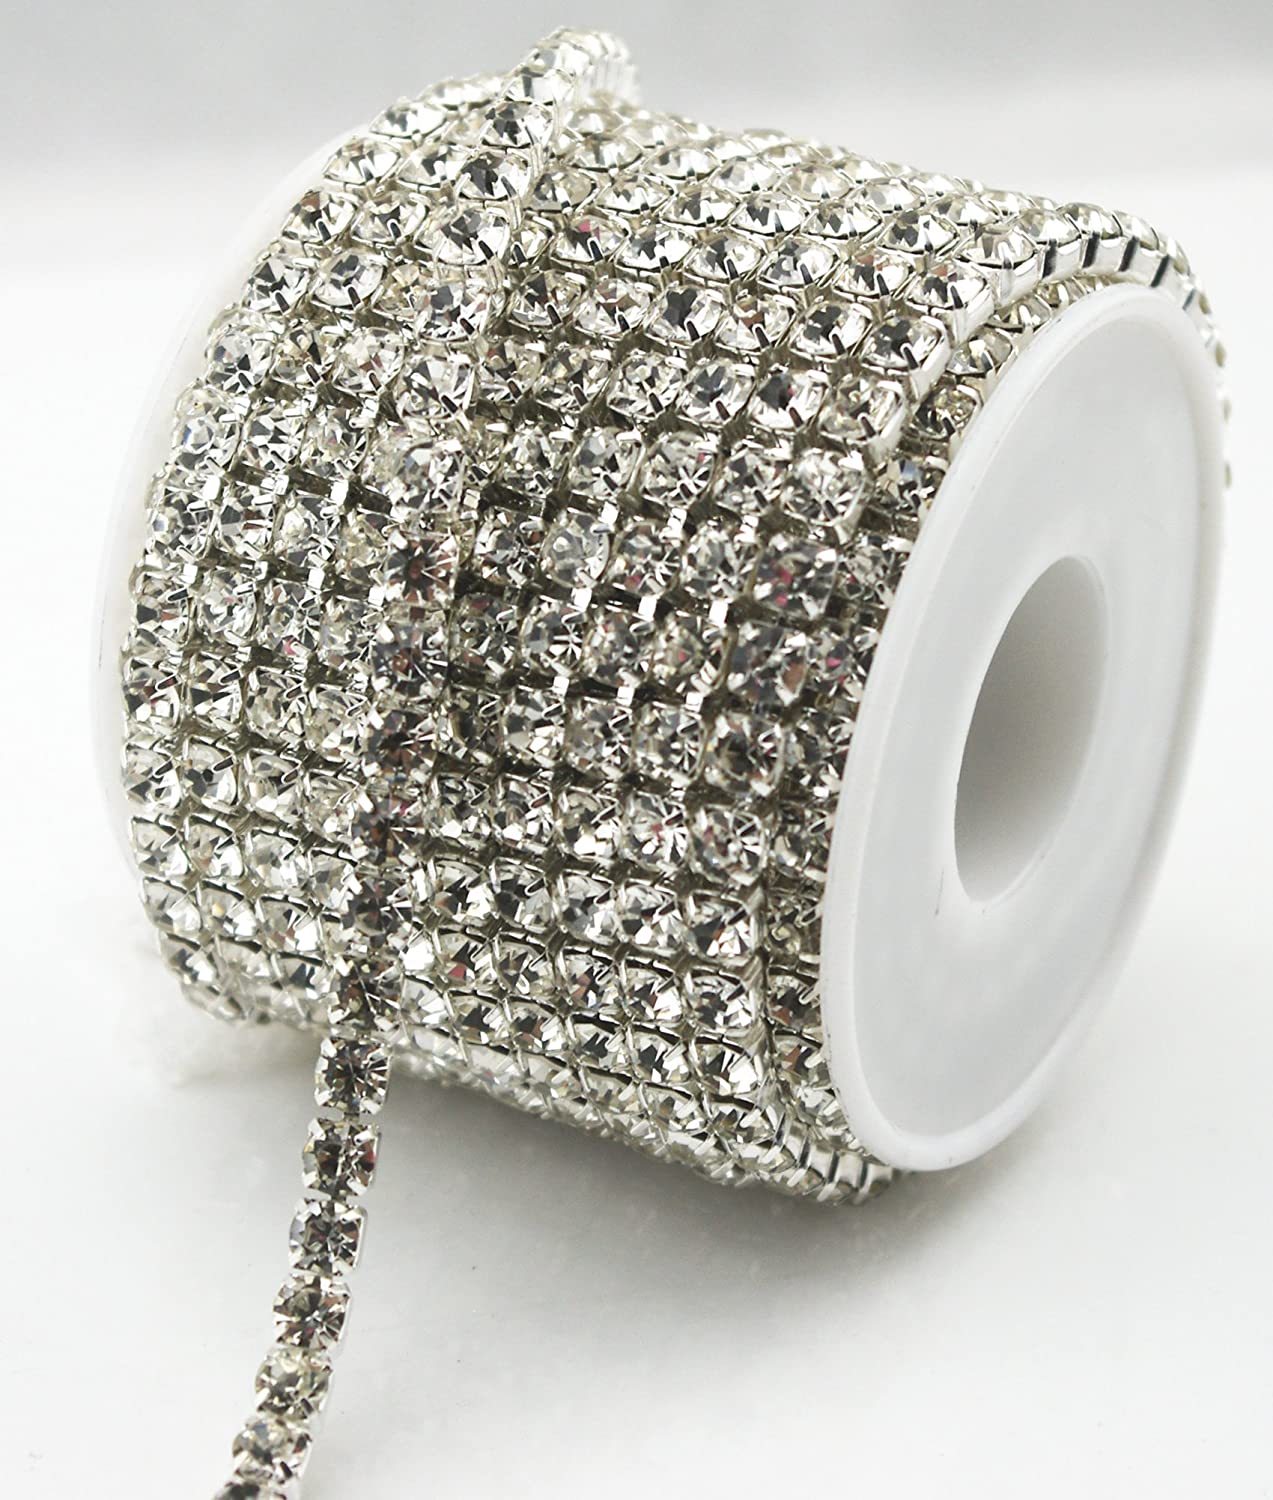 10yard 2.8mm Clear Crystal Rhinestone Chain Close Trim Cup Chain Bulk for Craft Jewelry Making (Silver)